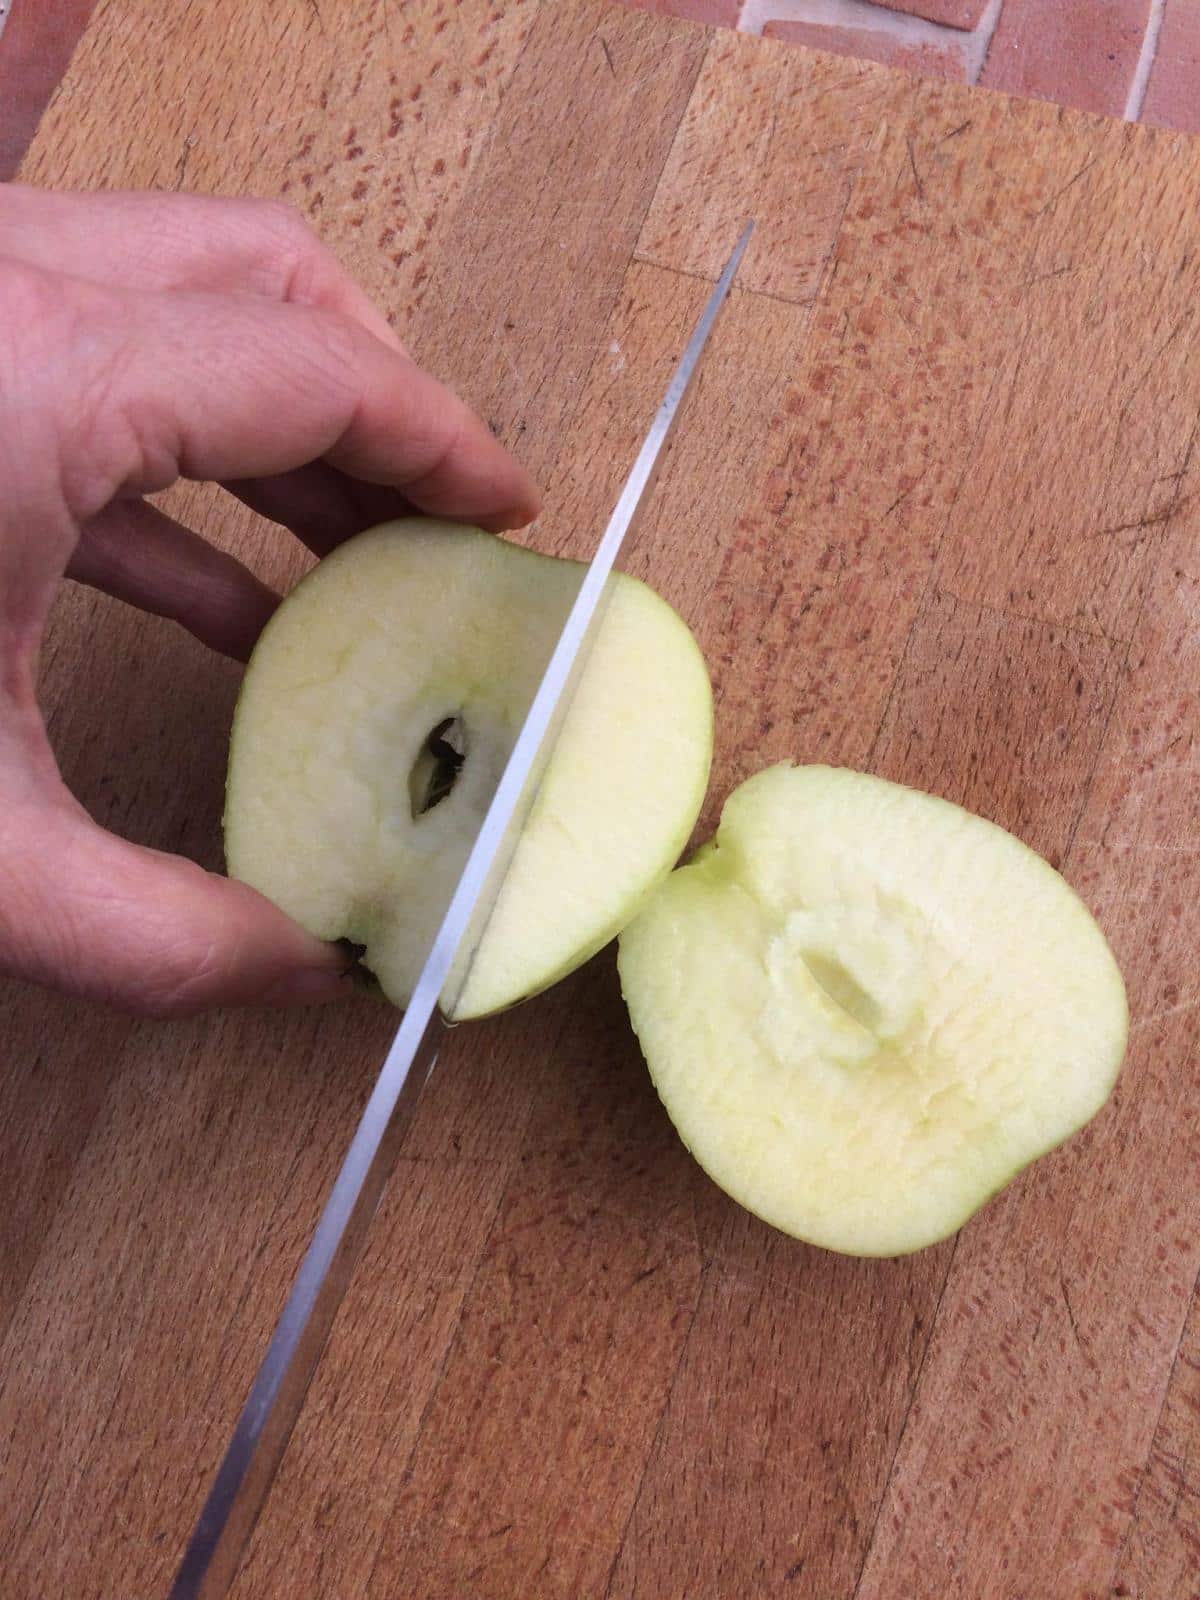 Preparing apples second cut.